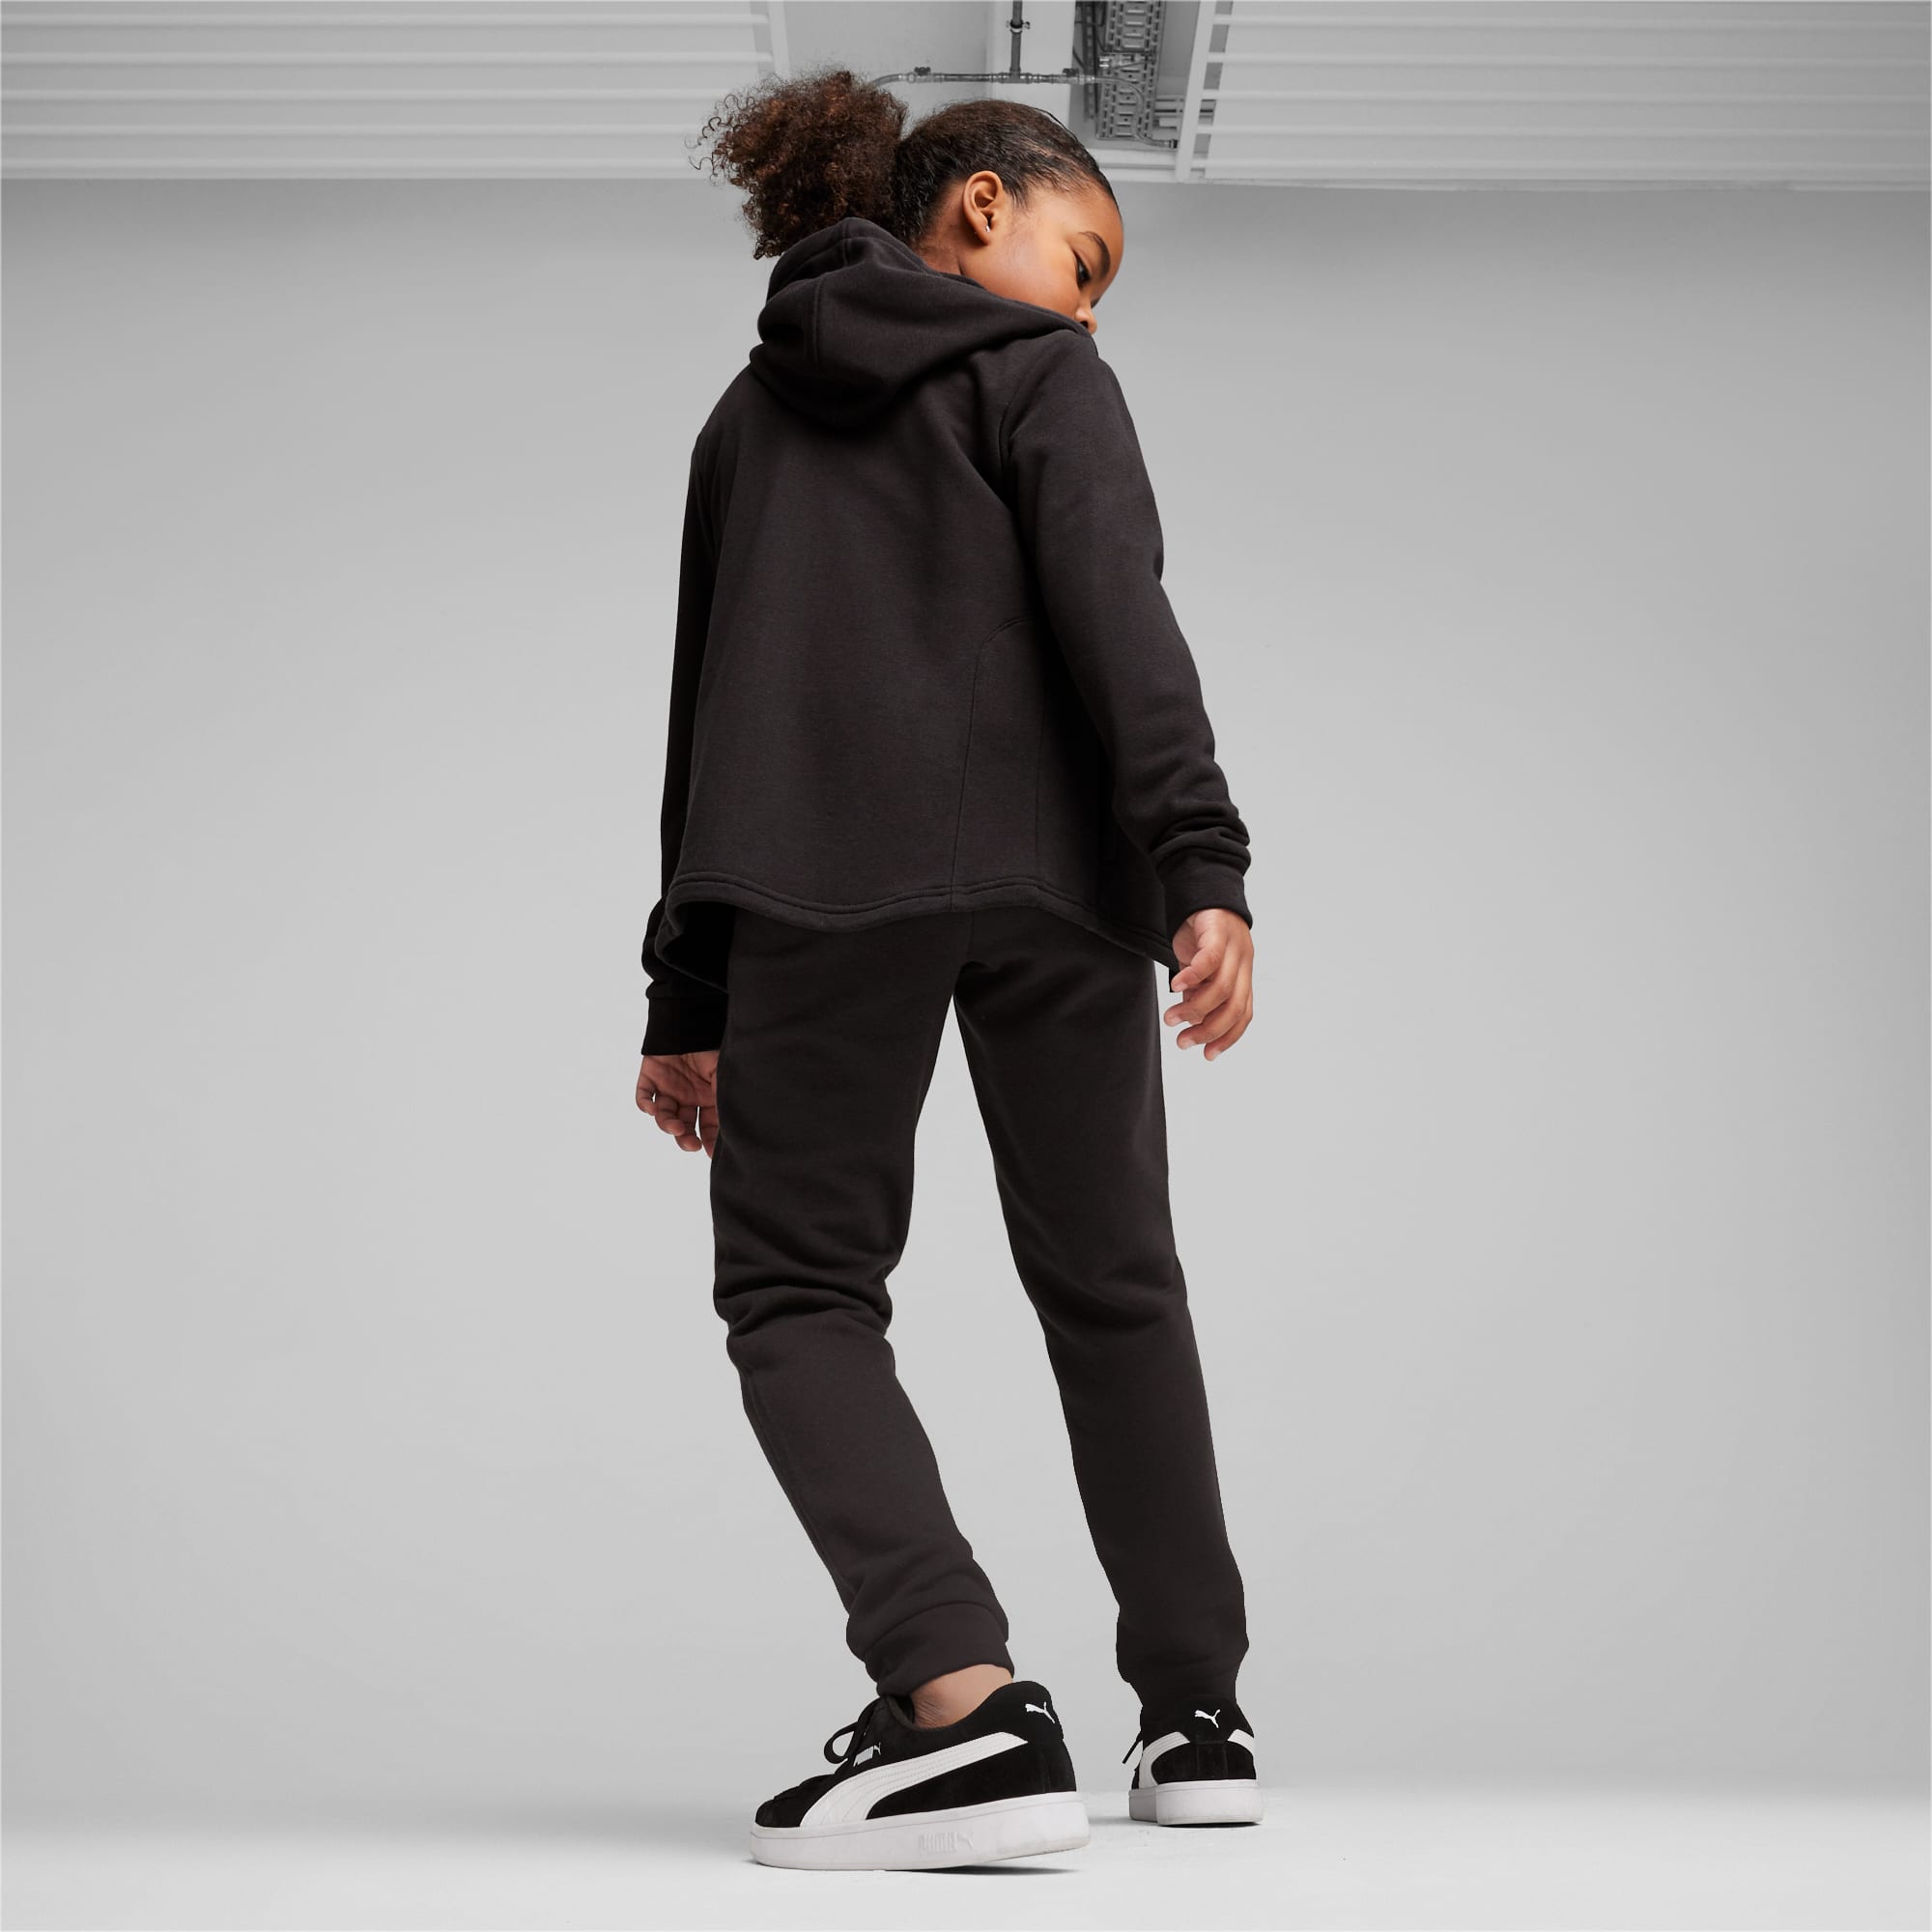 PUMA Hooded Sweatsuit Youth, Black, Size 104, Clothing